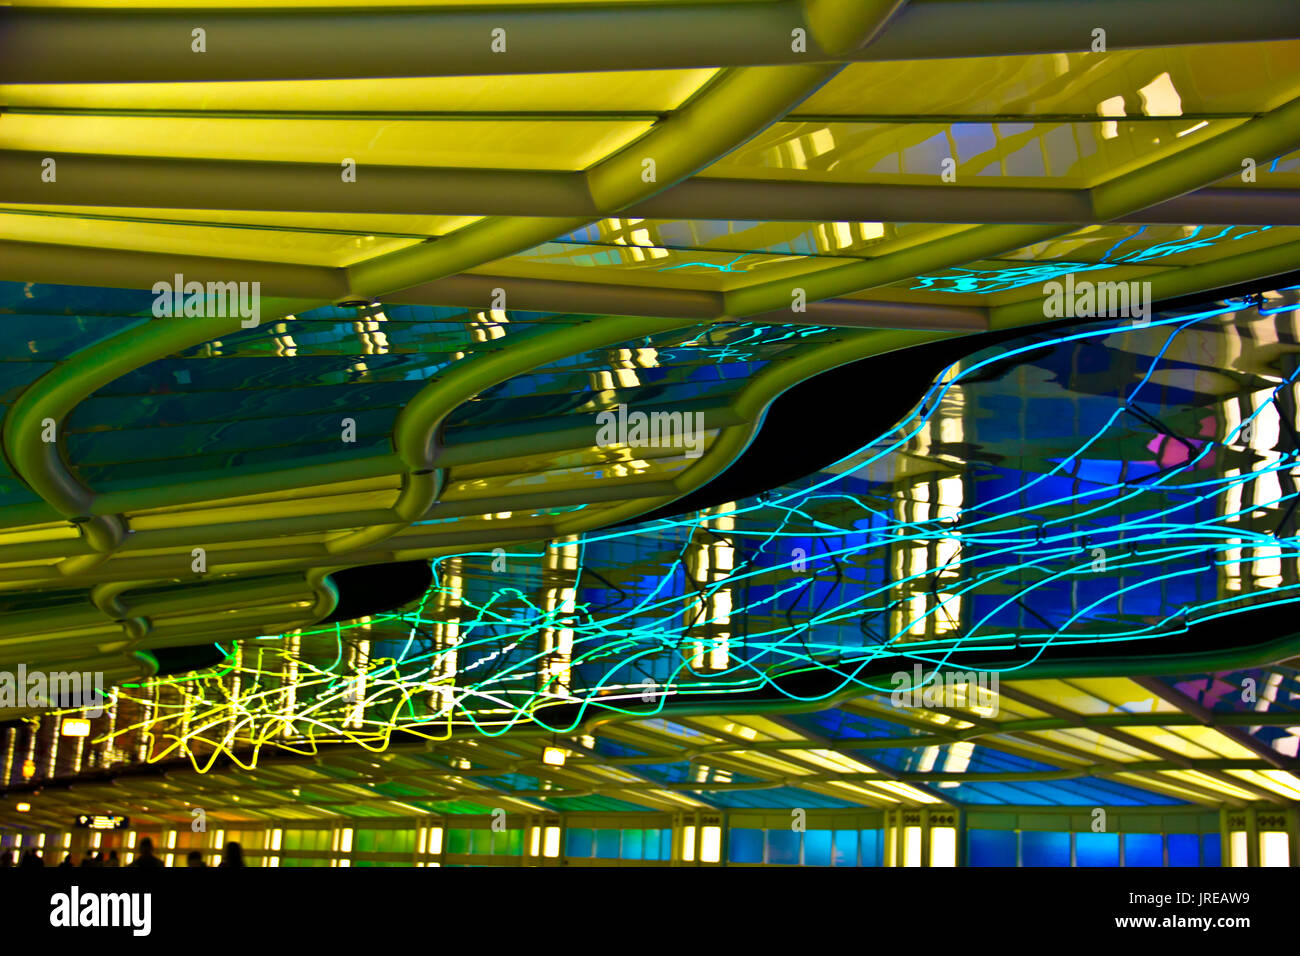 Brilliant neon lights illuminate the Chicago O'Hare airport walkway. Stock Photo